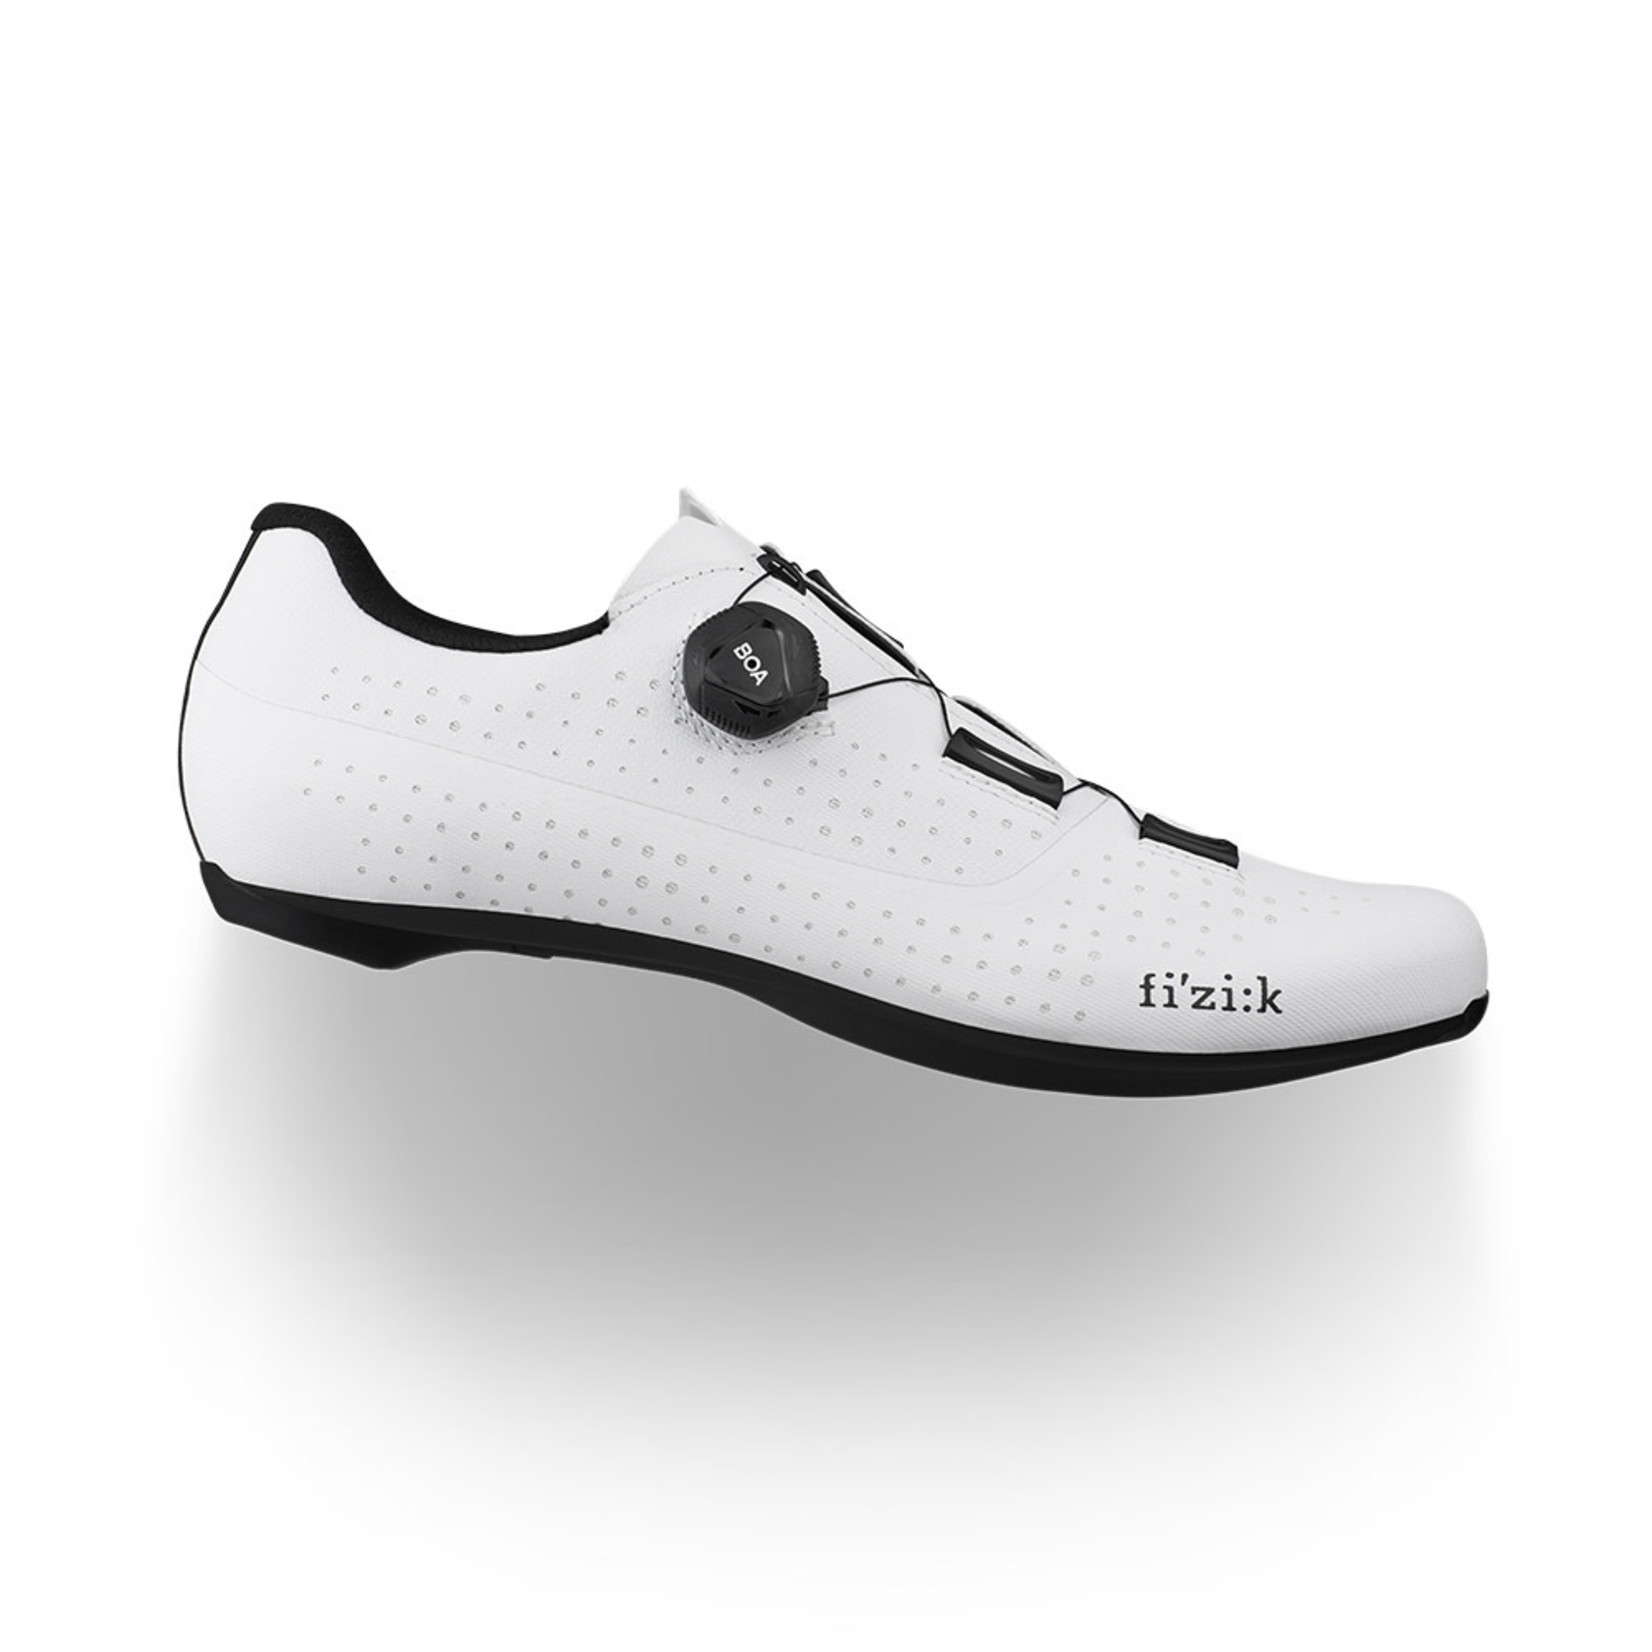 Fizik Fizik Tempo Overcurve R4 Outsole Carbon Nylon Road Shoes - White/Black